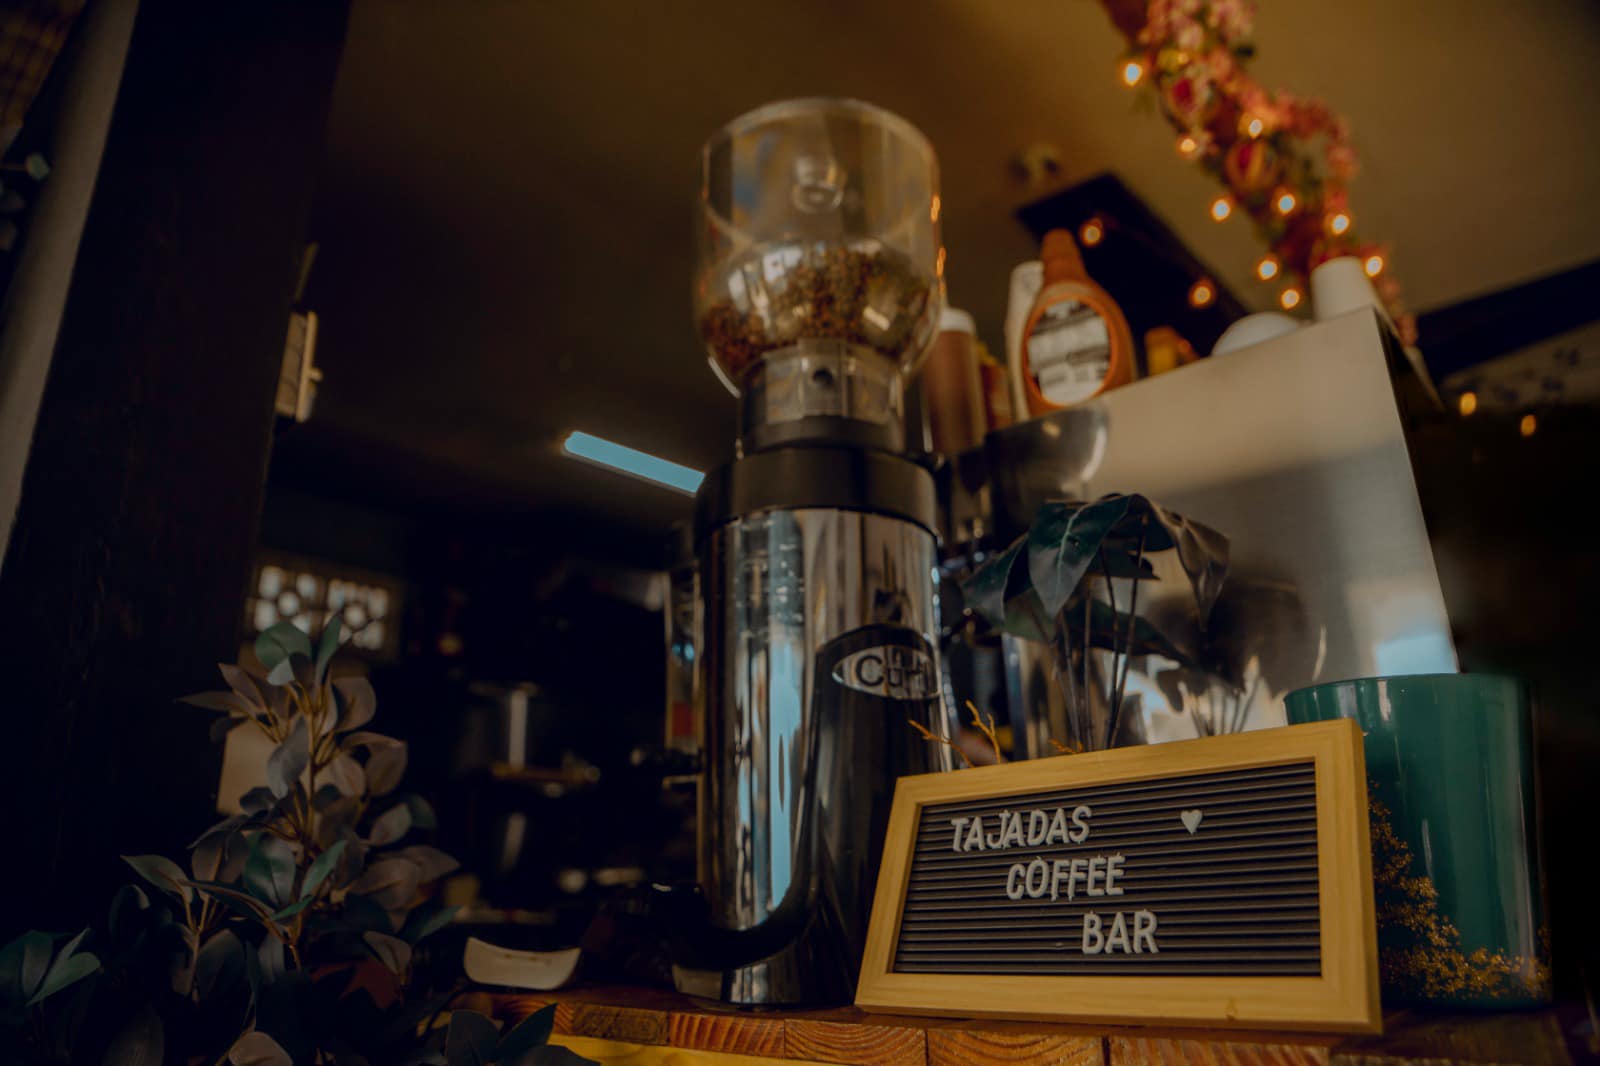 Tajadas Coffee Bar